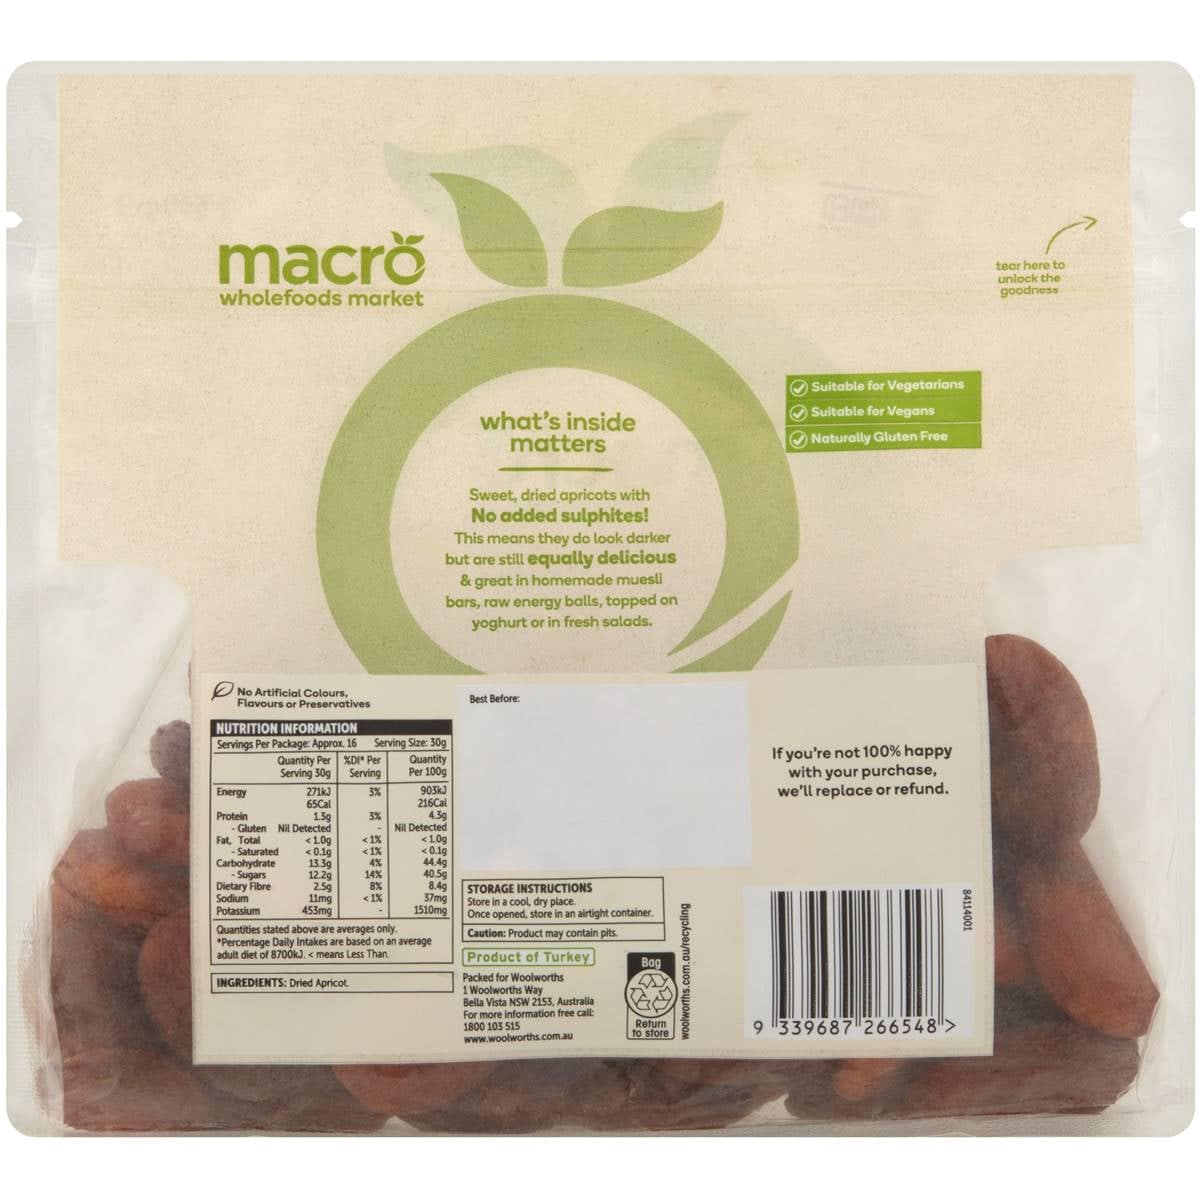 Macro Dried Apricots 500g